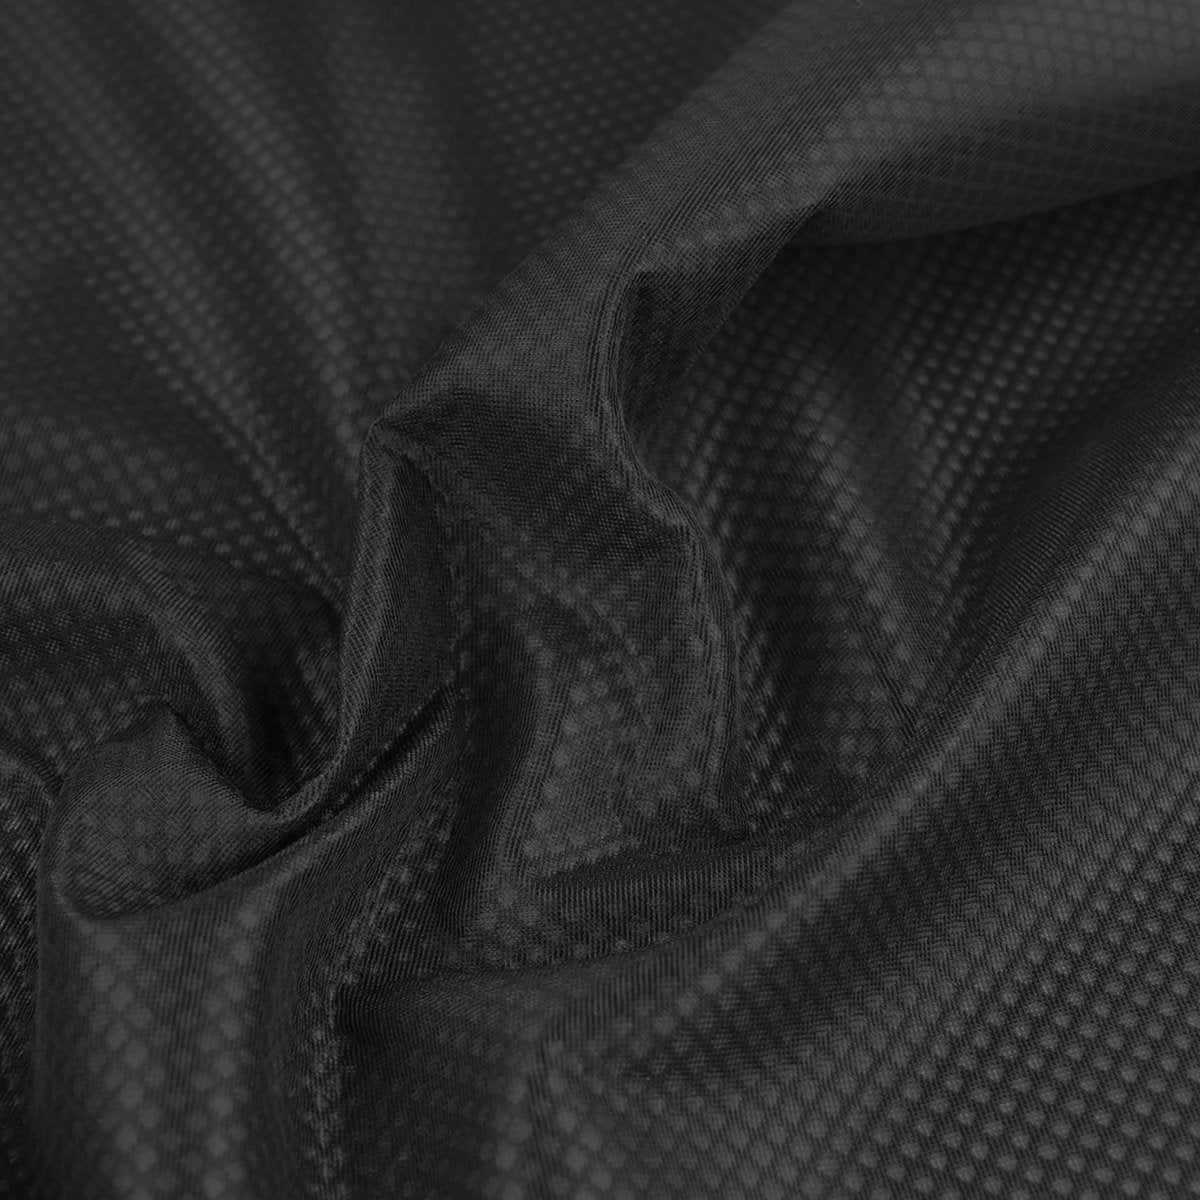 Black Punctured Mesh Kit Fabric 97775